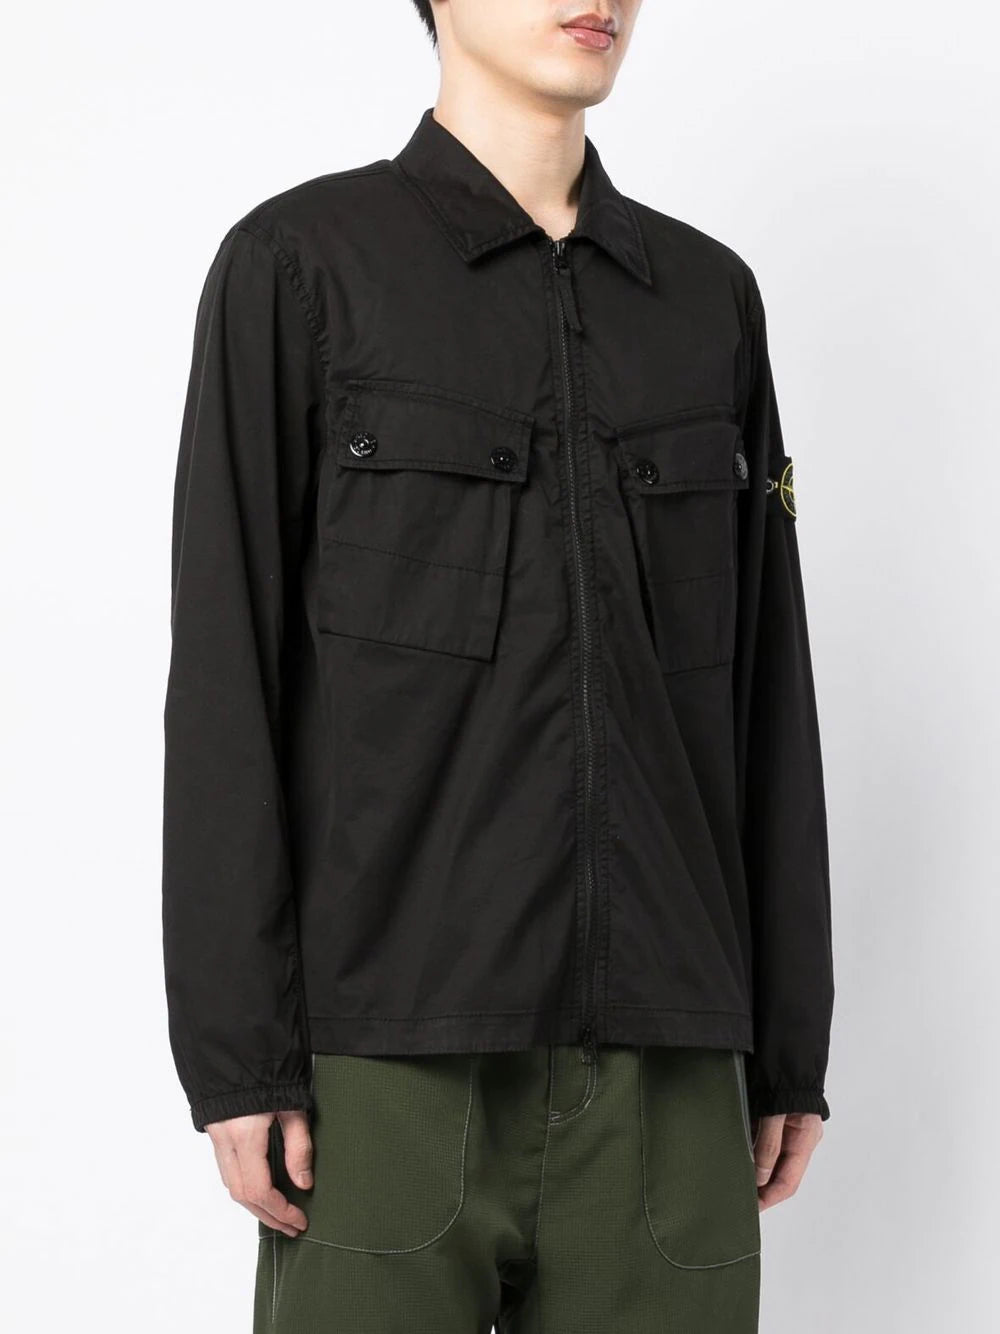 STONE ISLAND Compass-patch zip-up shirt Black - MAISONDEFASHION.COM